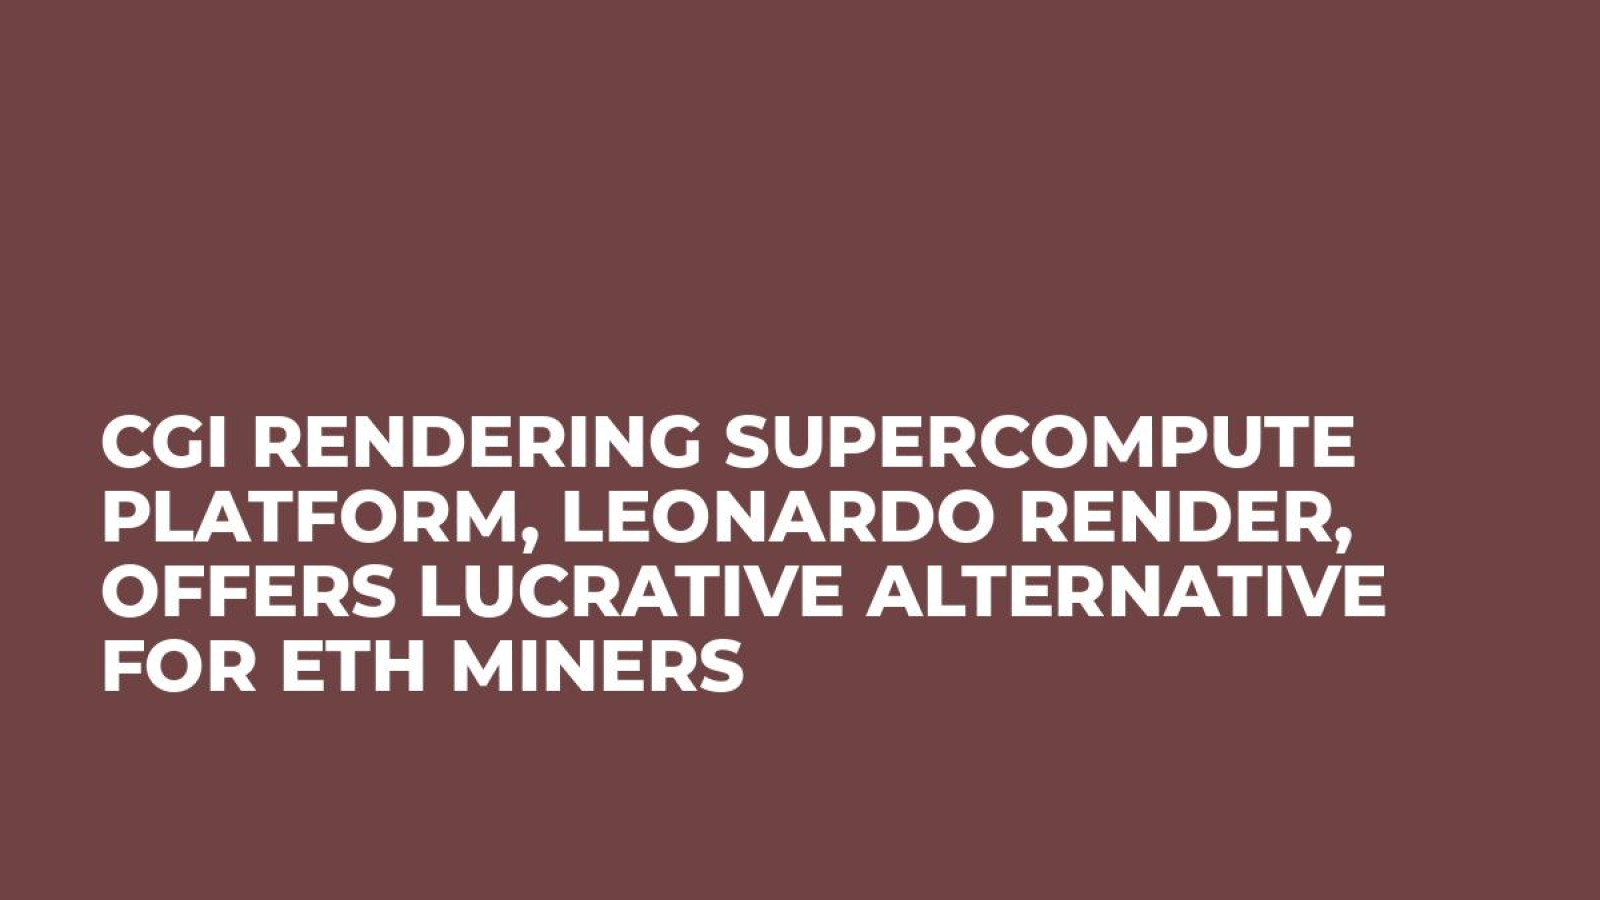 CGI Rendering Supercompute Platform, LEONARDO RENDER, Offers Lucrative Alternative For ETH Miners